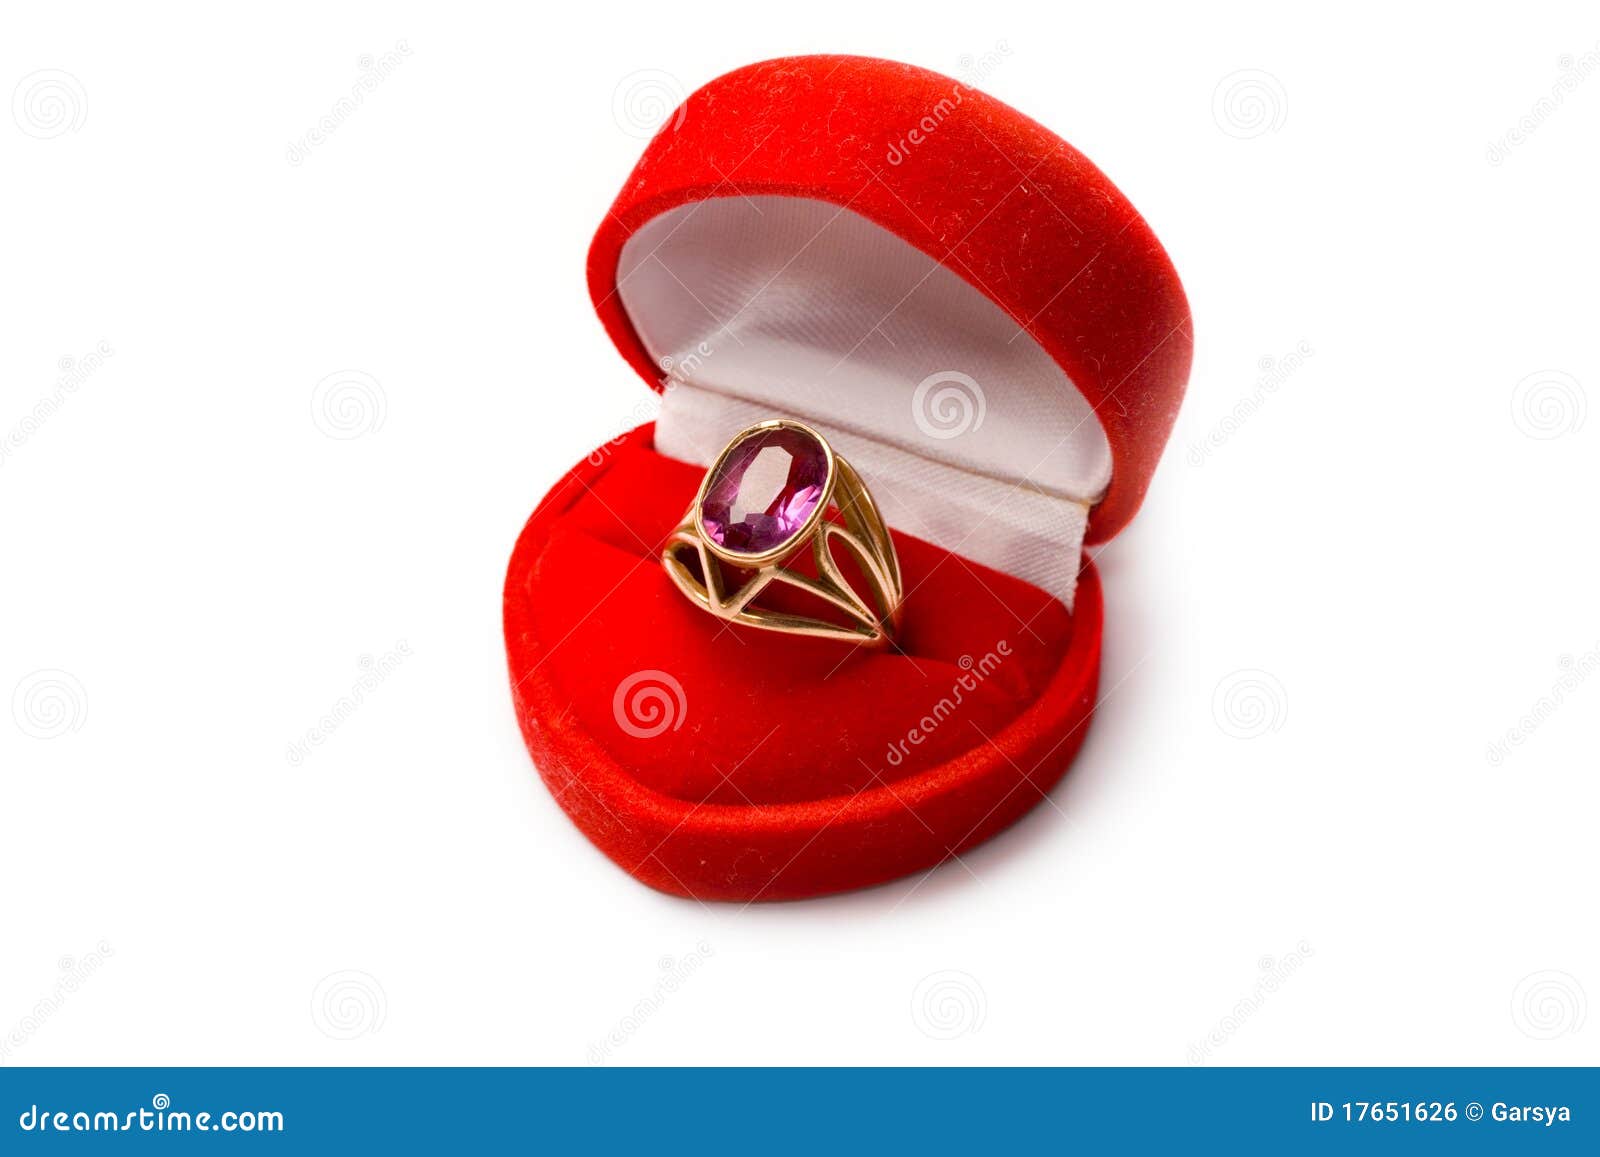 Heart-shaped Box Royalty Free Stock Image - Image: 17651626